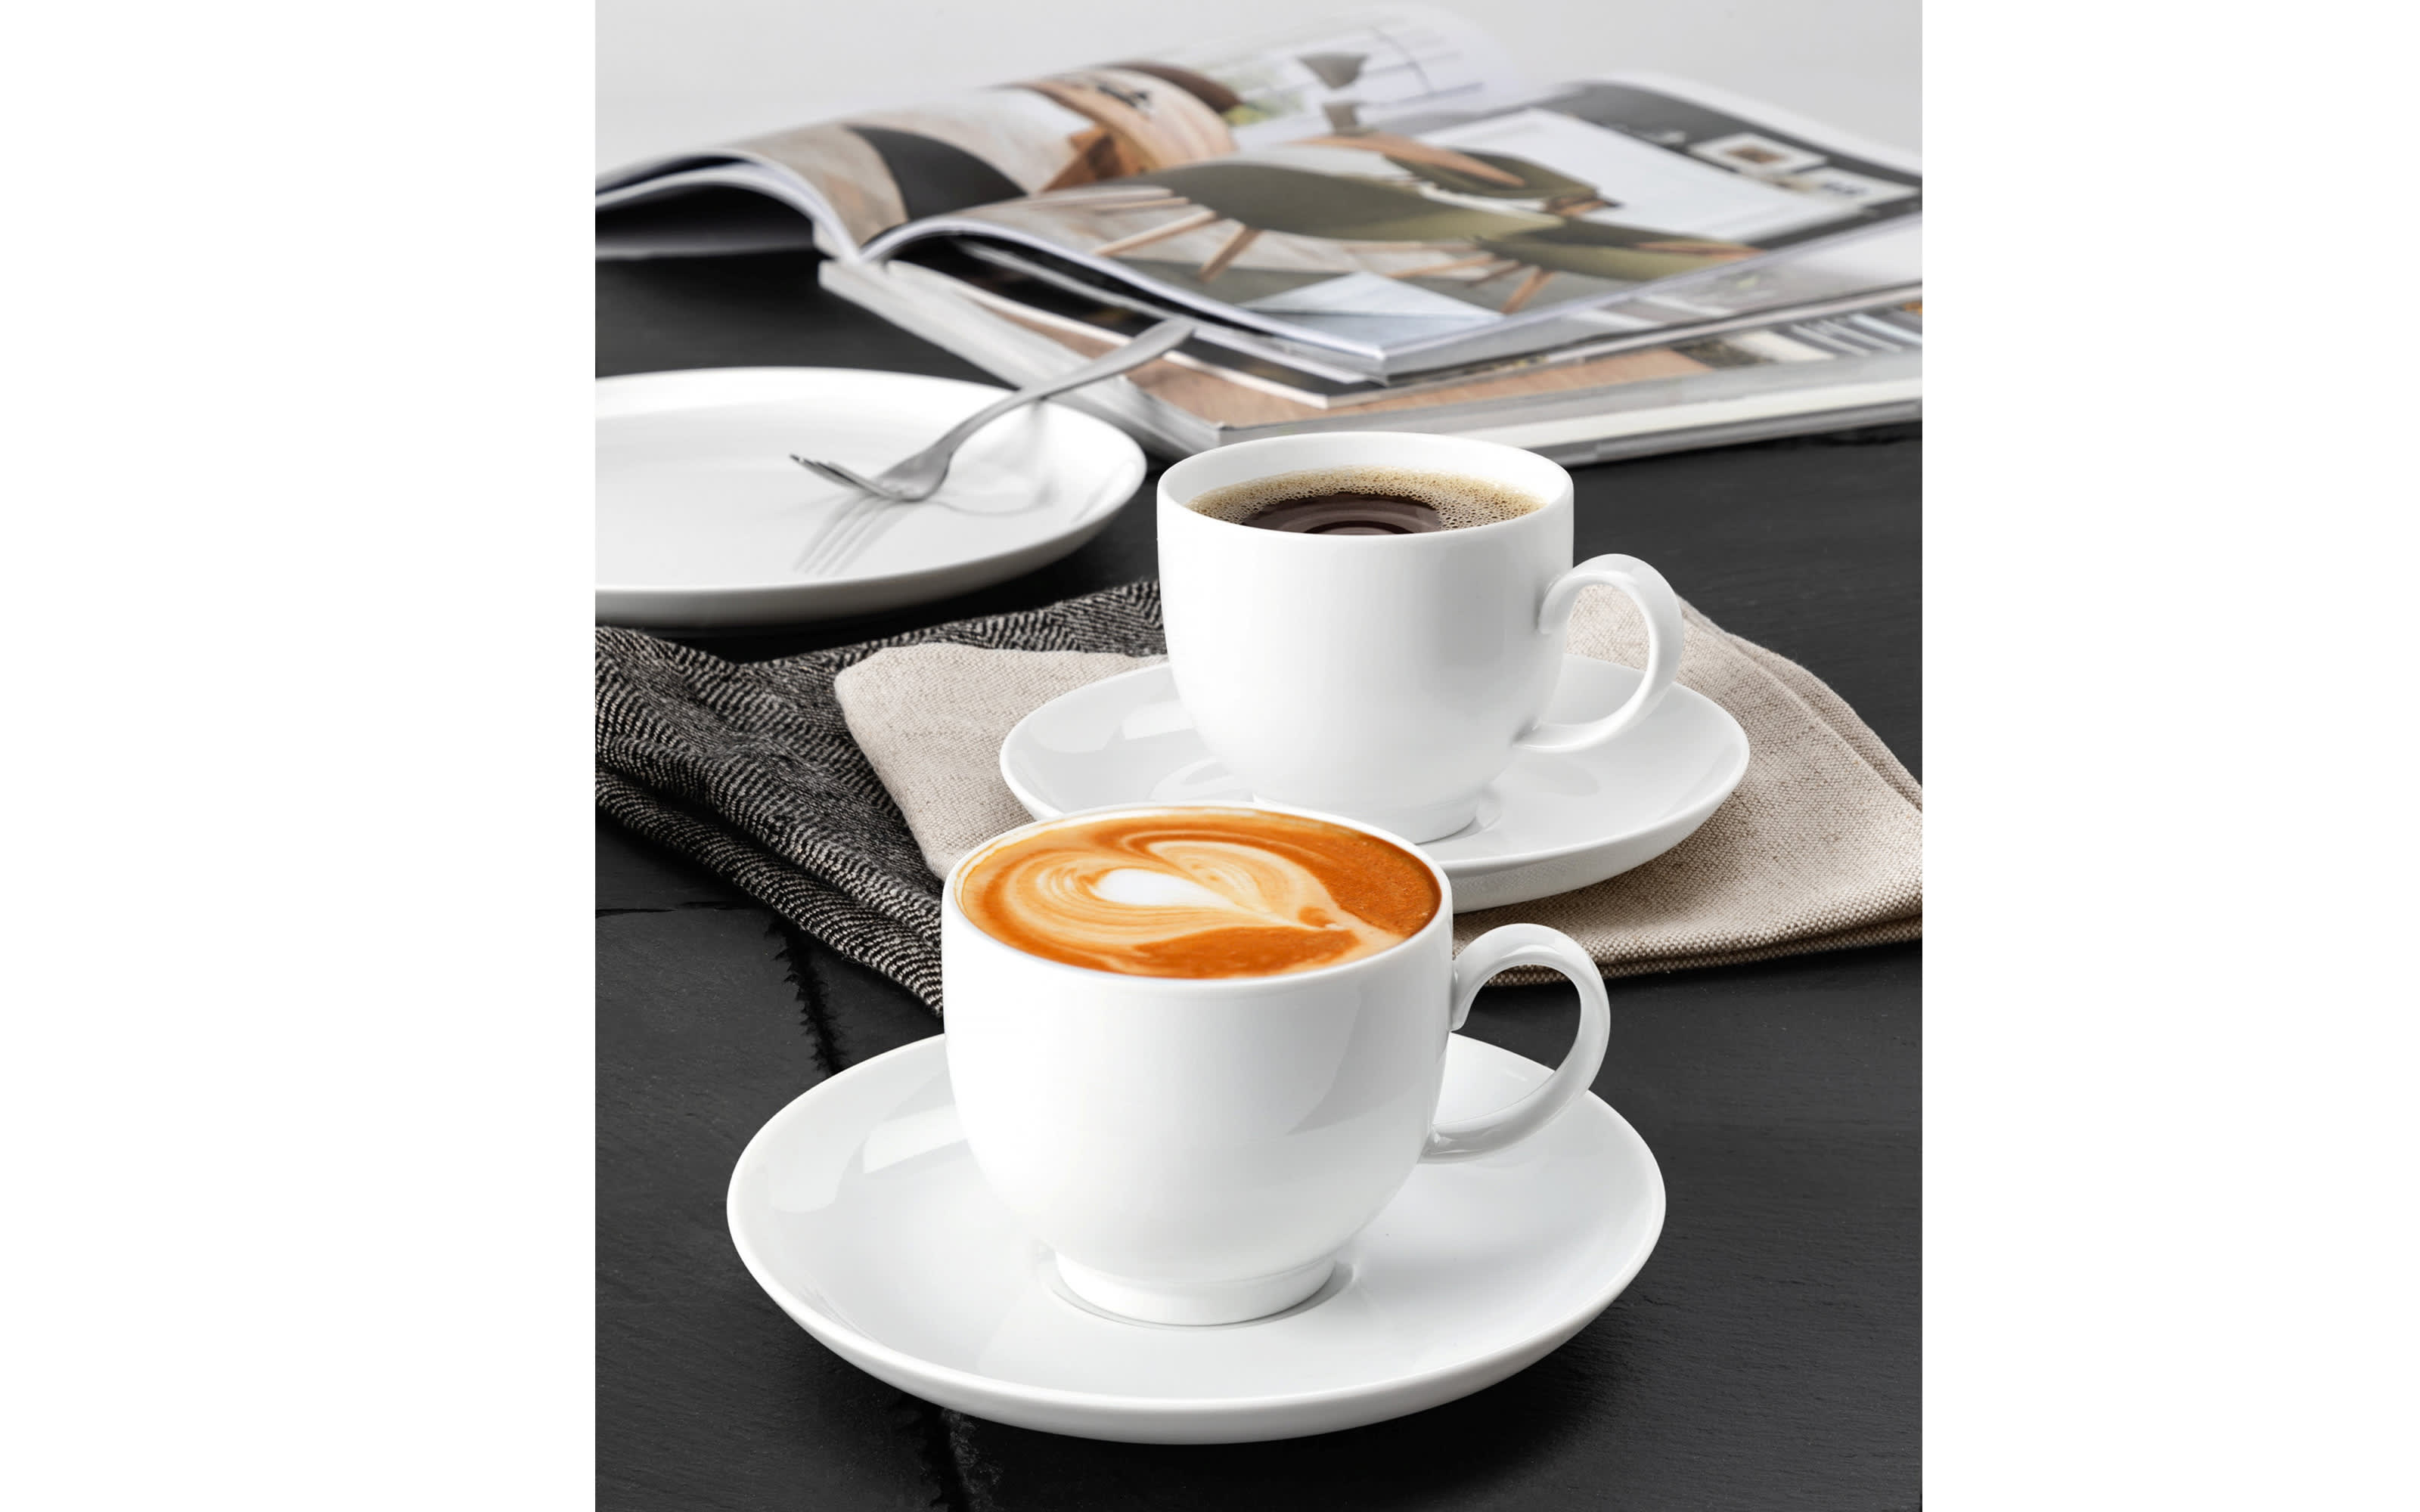 Kaffeeservice Lido uni 3 aus Porzellan in weiß, 18-teilig